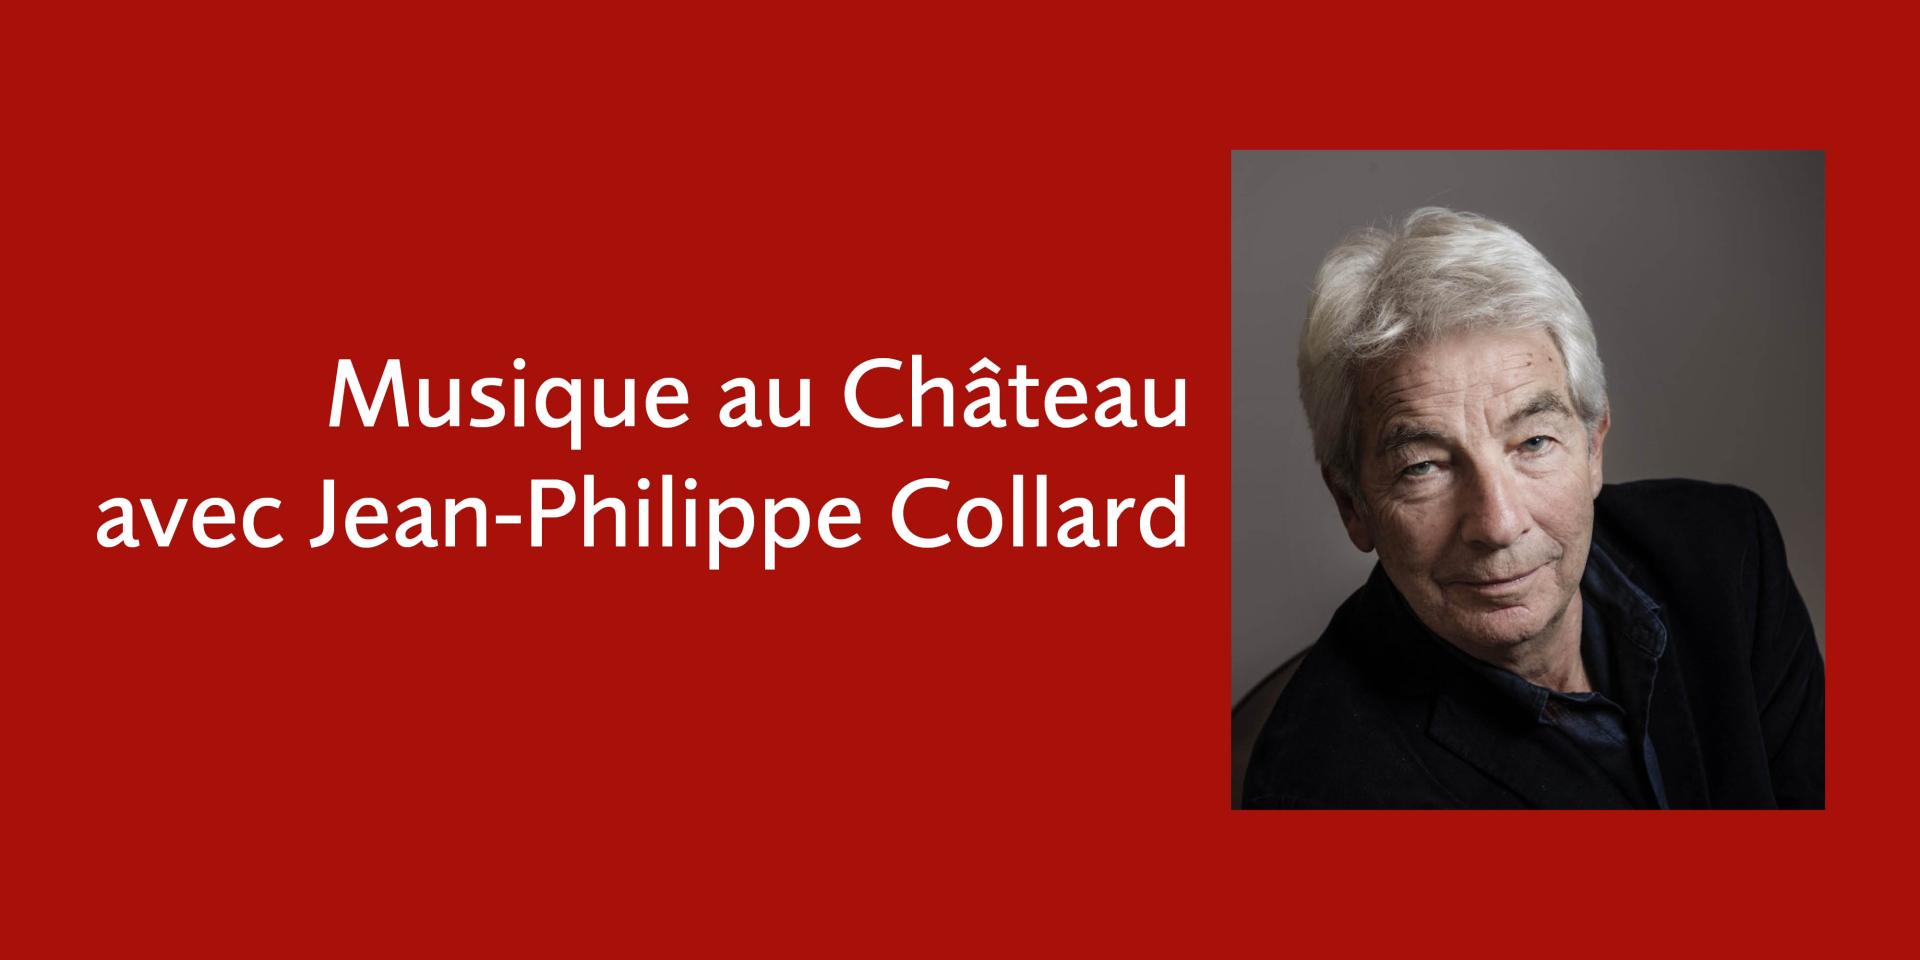 Jean-Philippe Collard